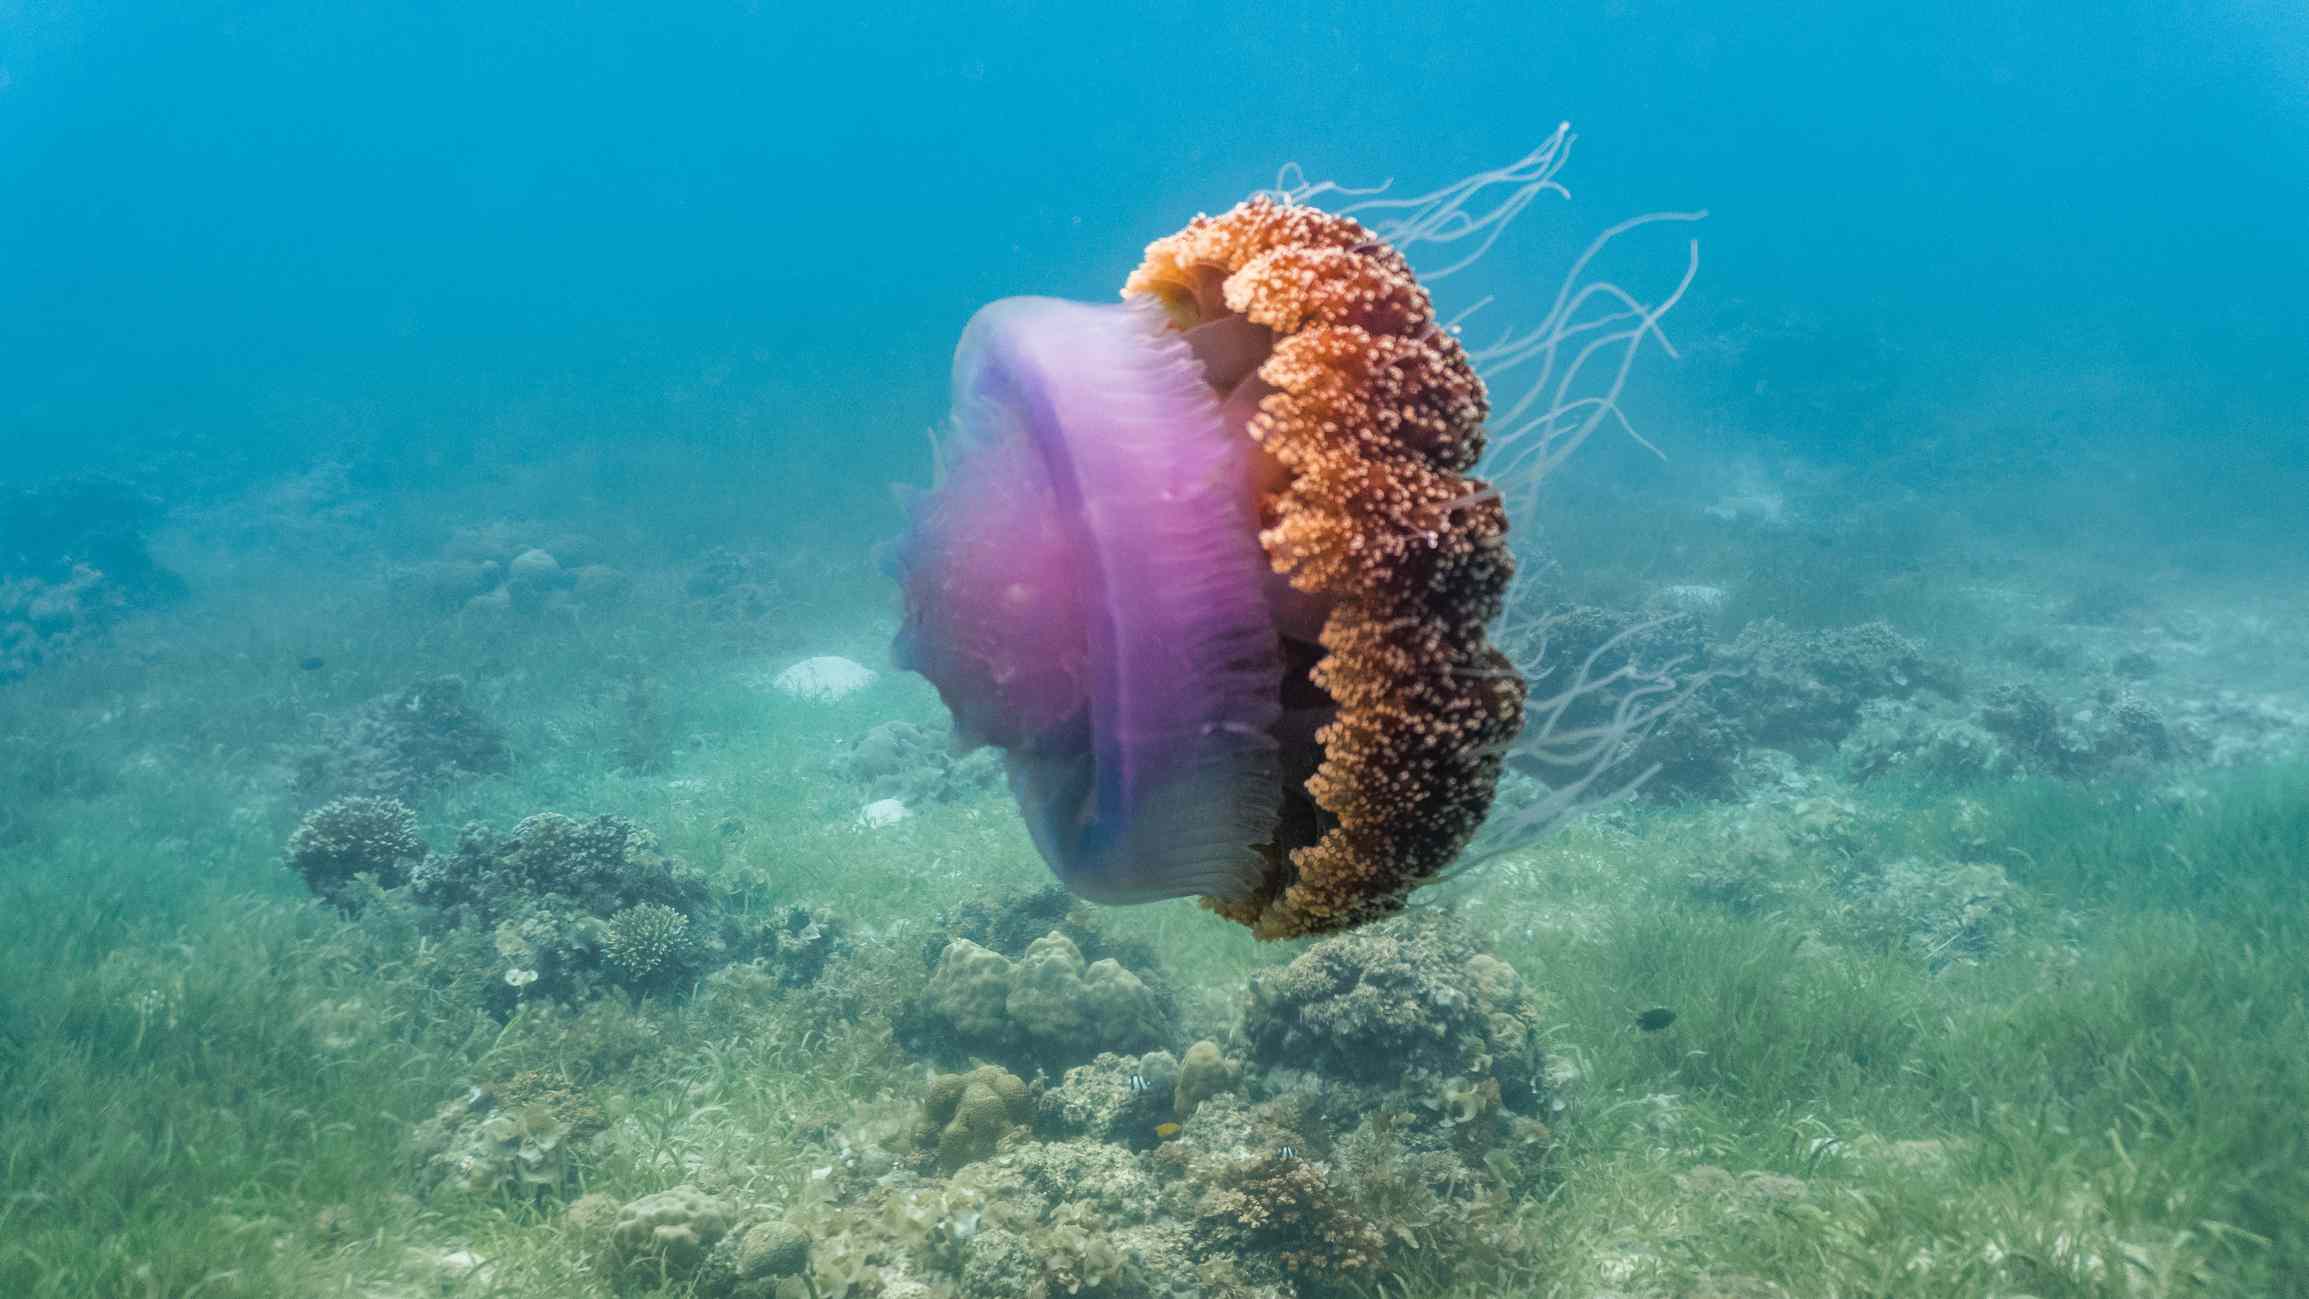 Hermosa medusa coliflor o corona flotando cerca de la superficie